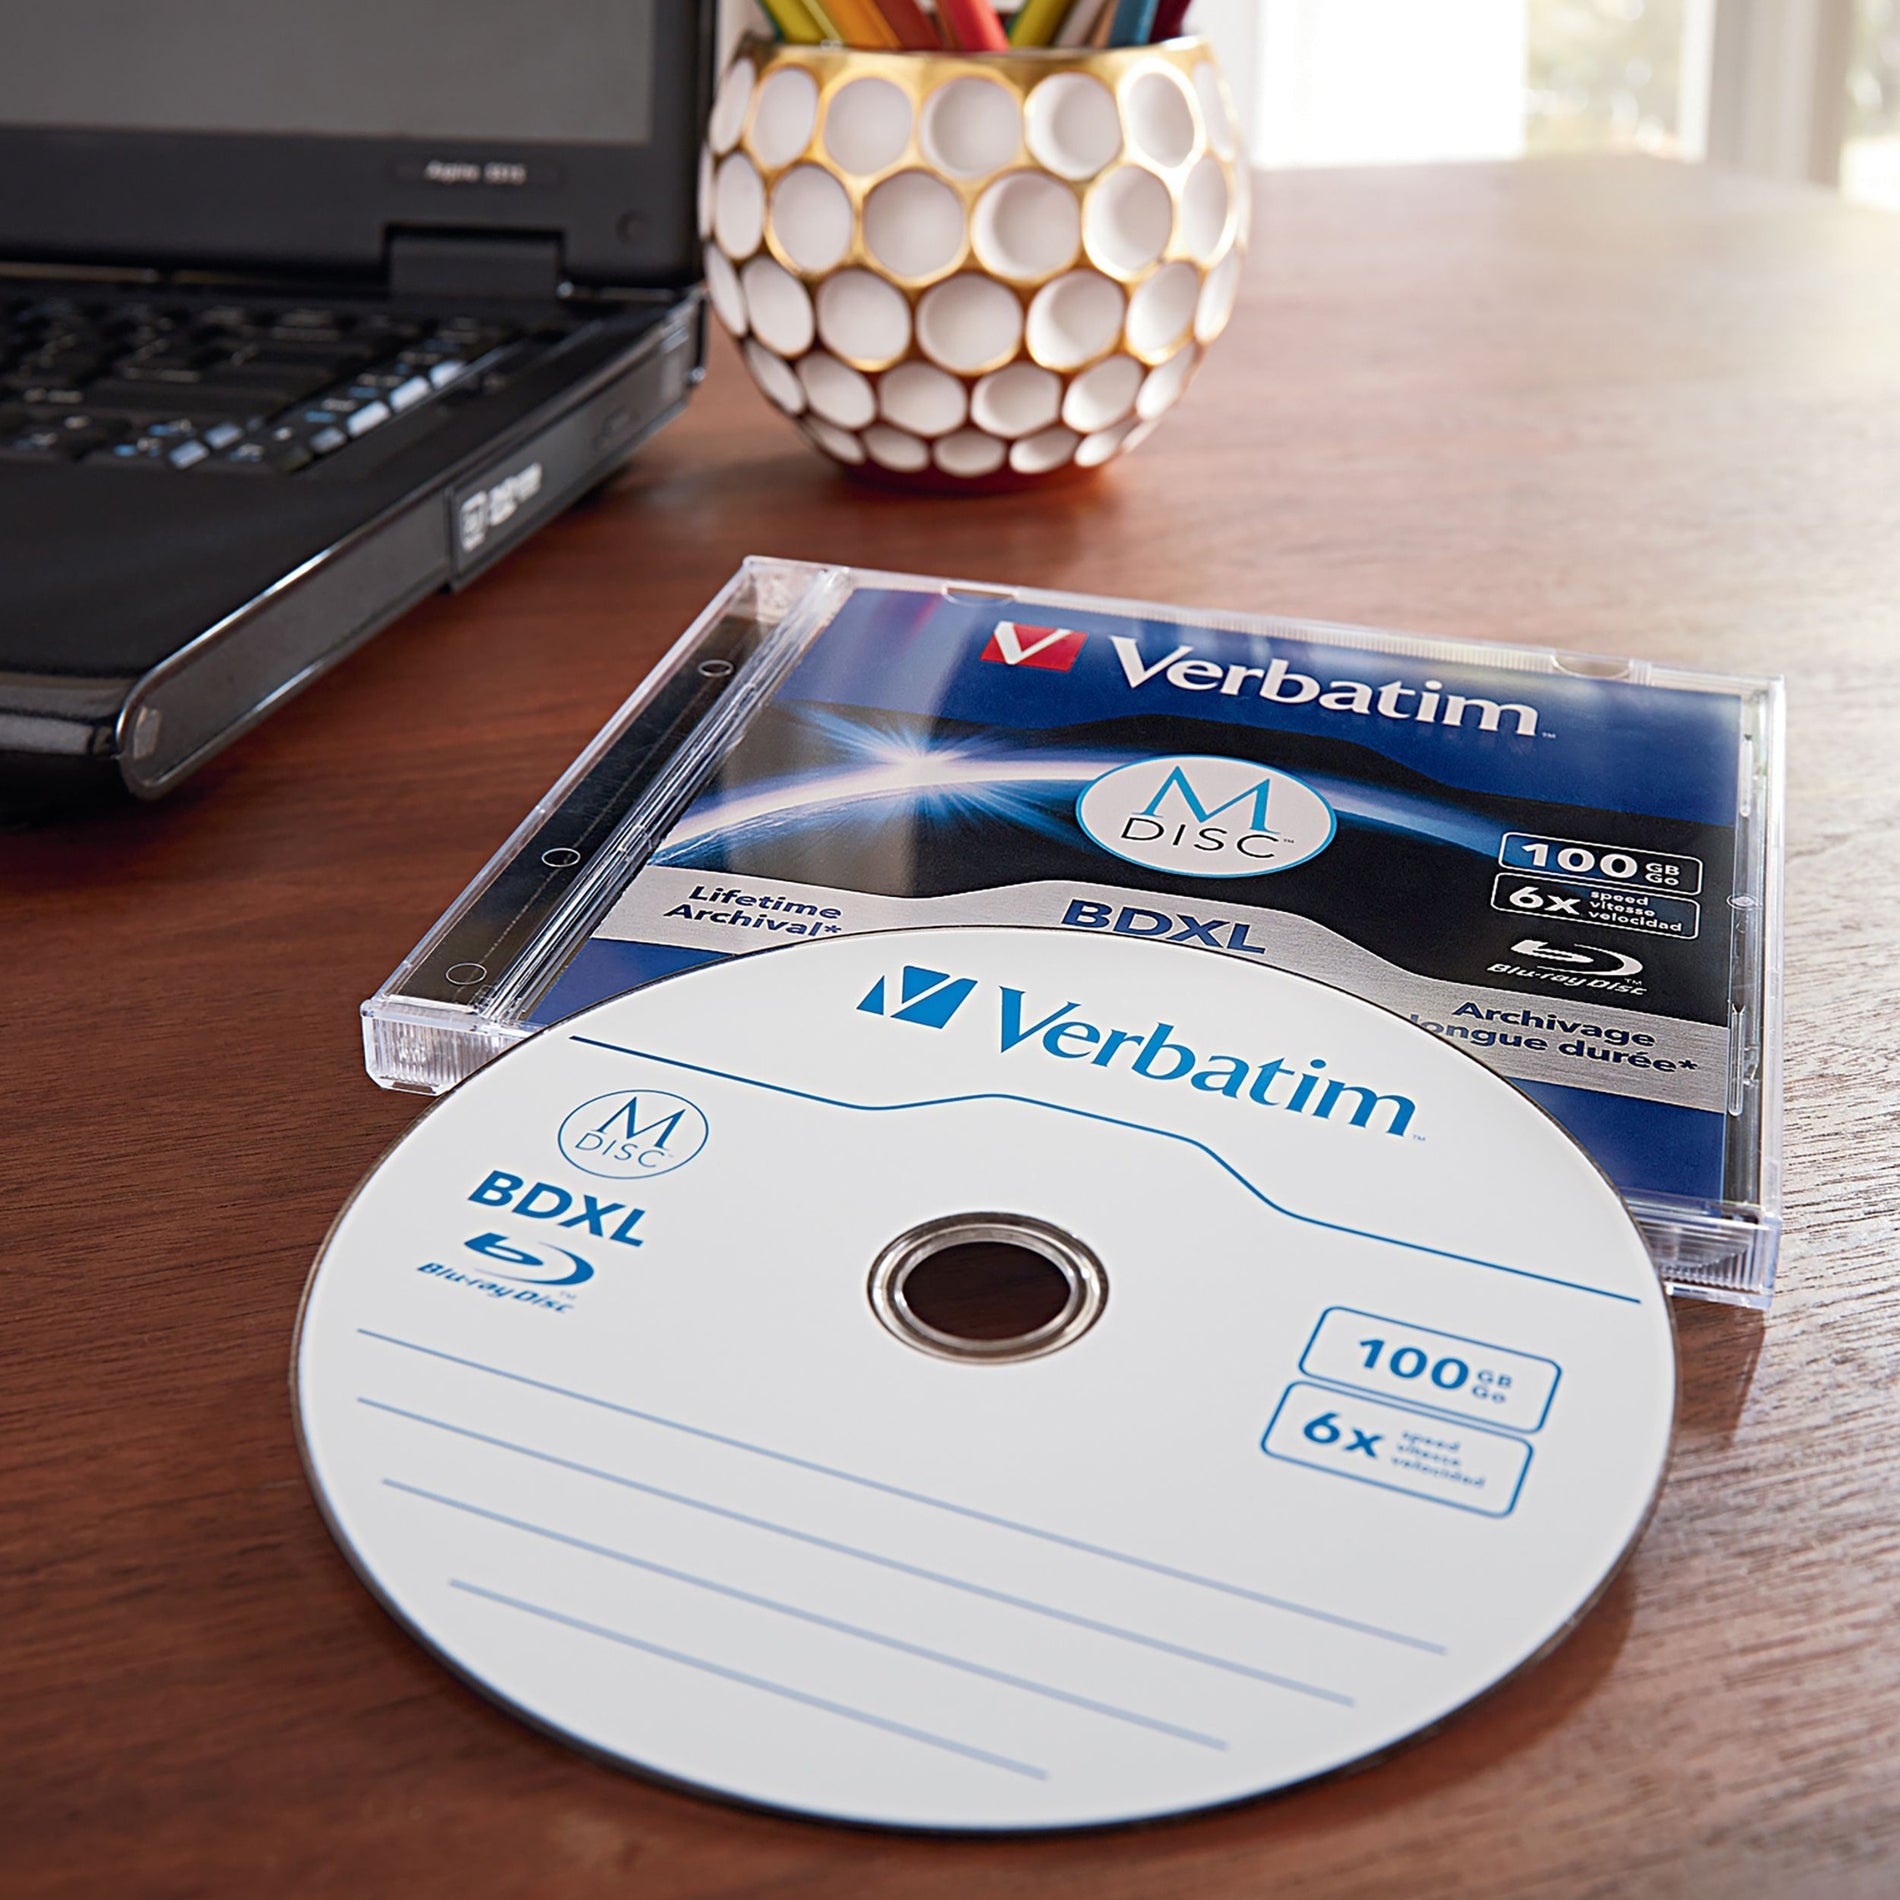 Verbatim 98912 M Disc BDXL 100GB 6X Blu-ray Recordable Media, Long-lasting Data Storage